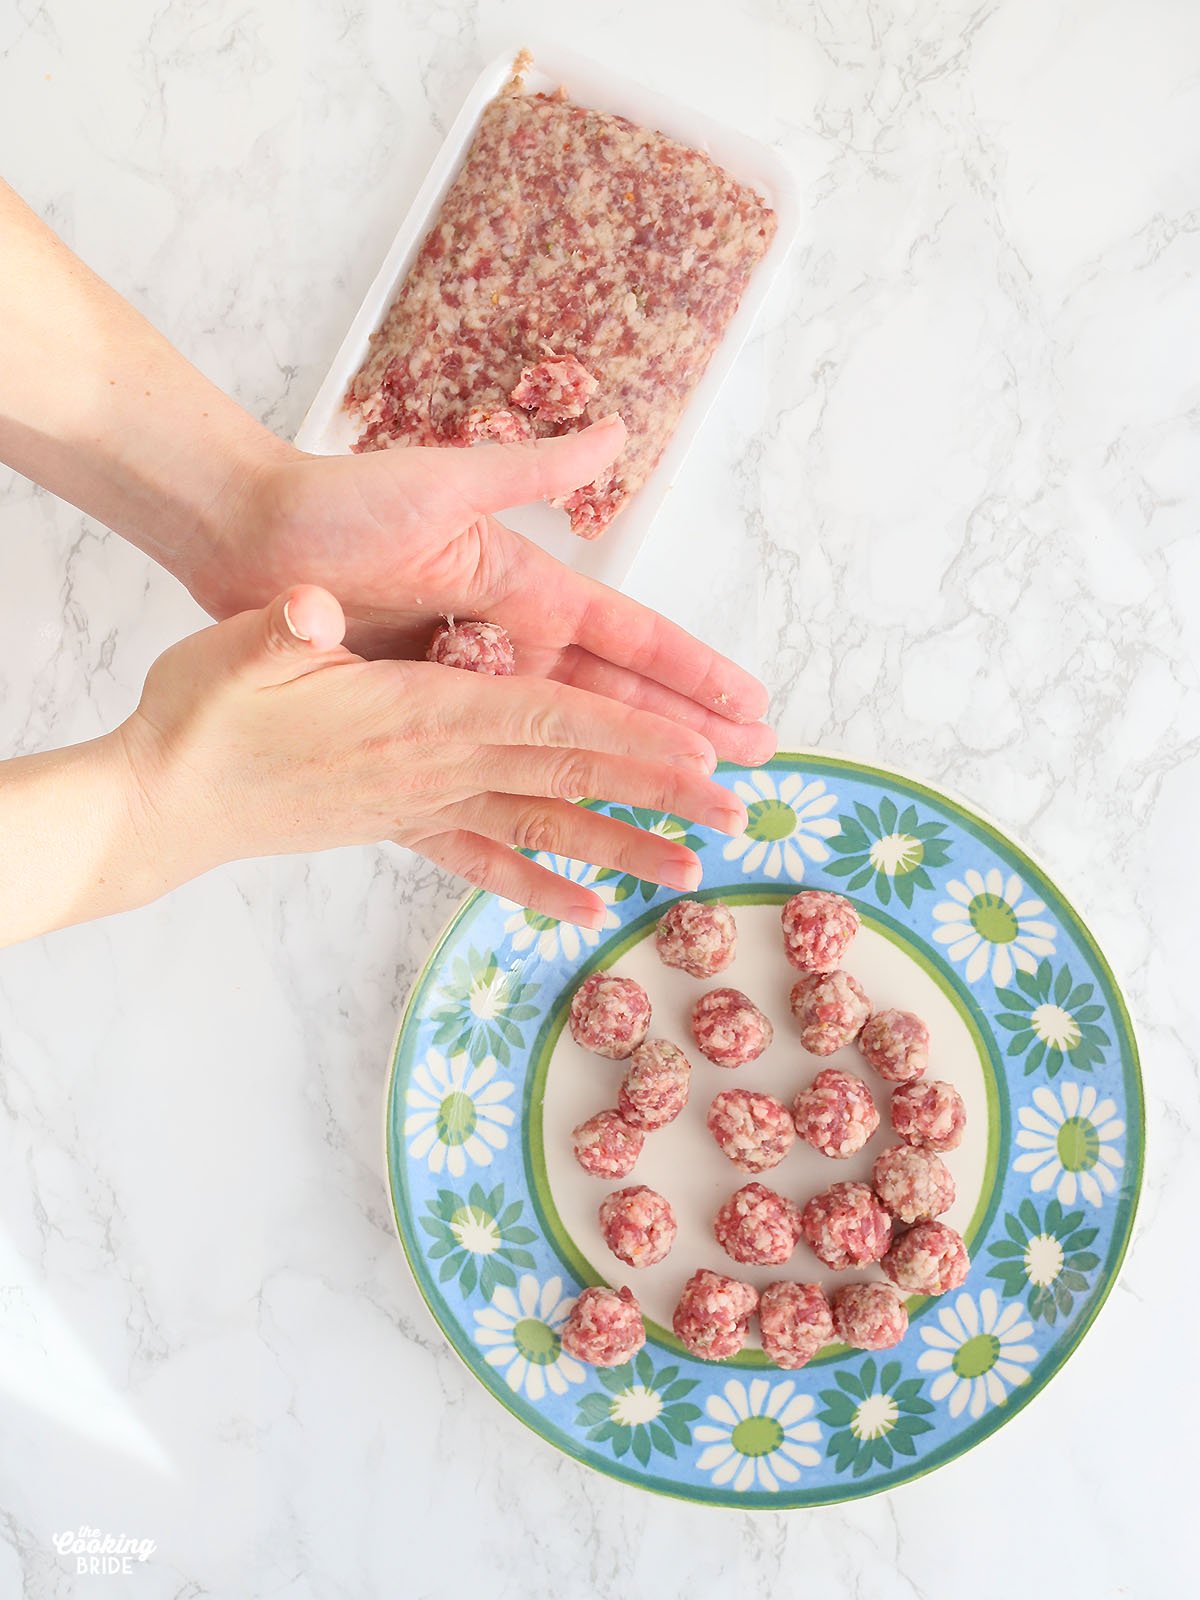 hands rolling Italian sausage into meatballs